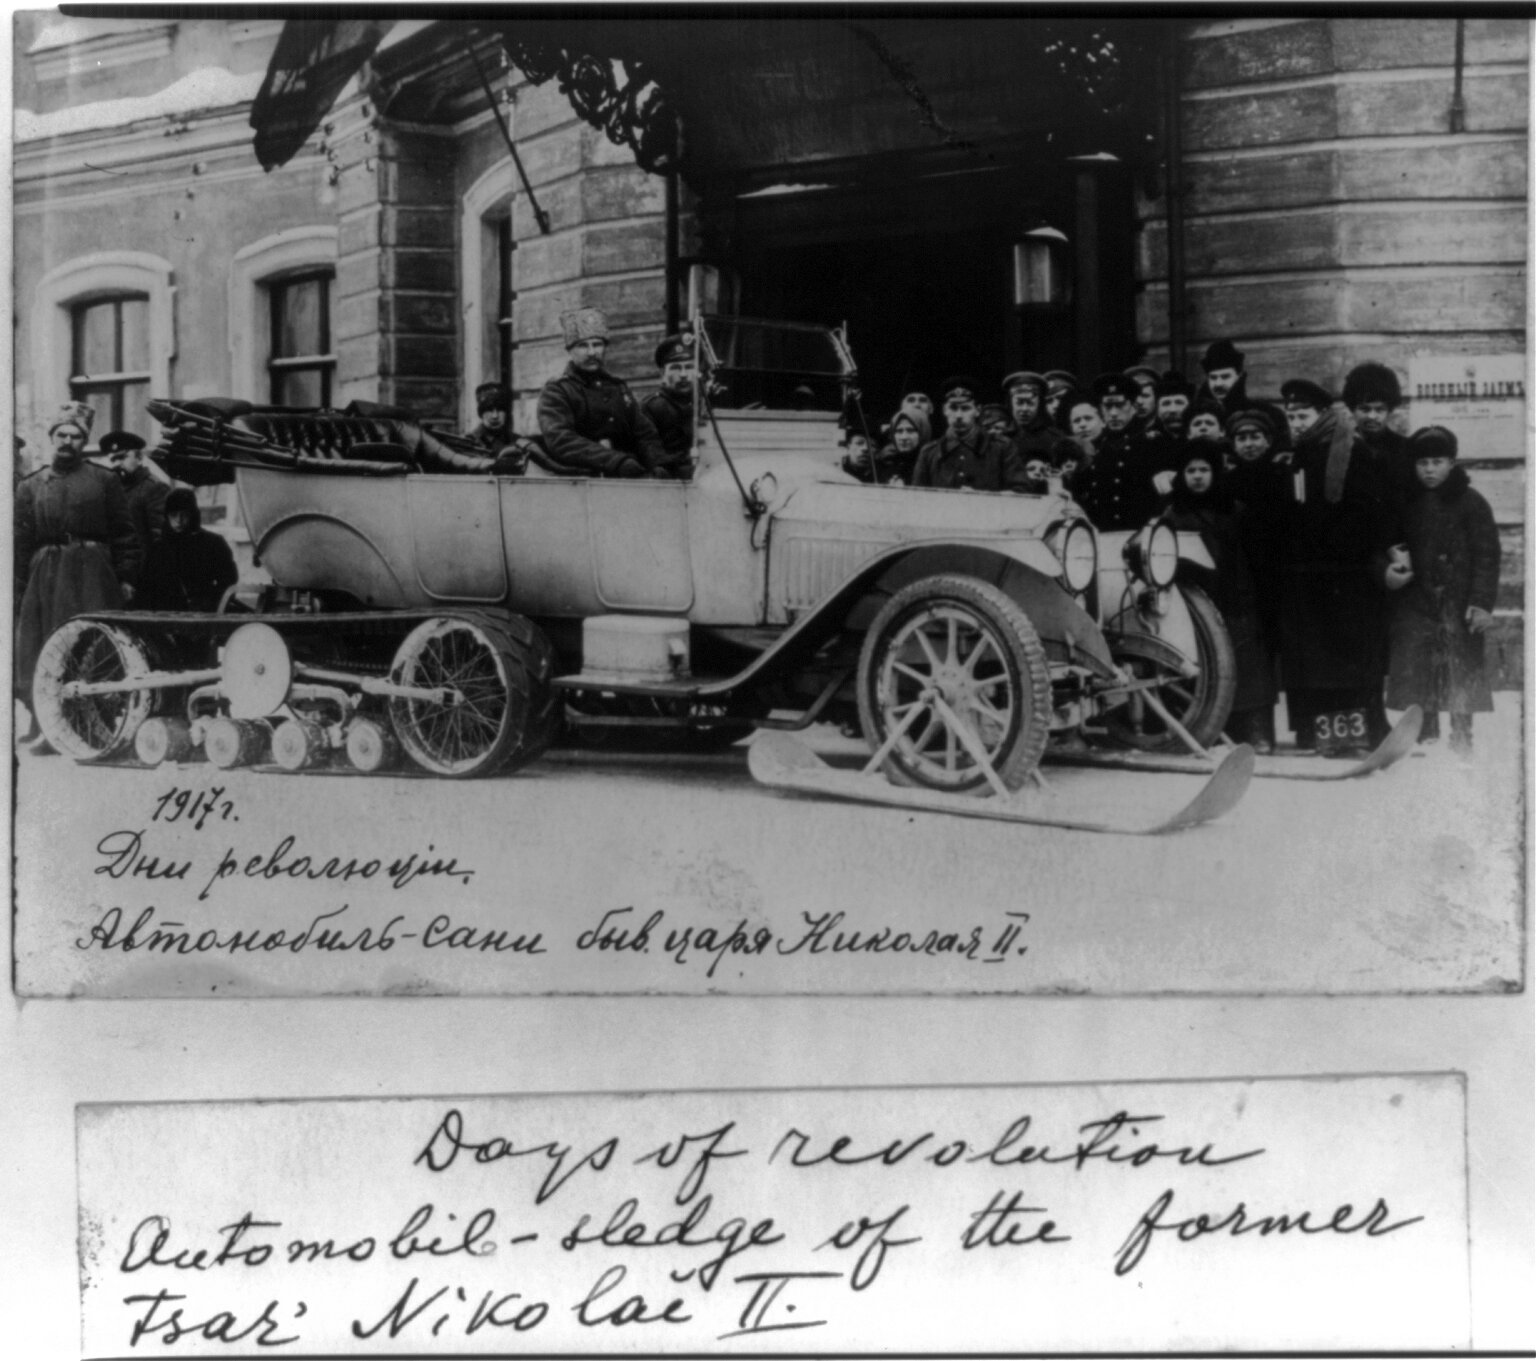 Automobile-sledge of the former Tsar Nikolai II